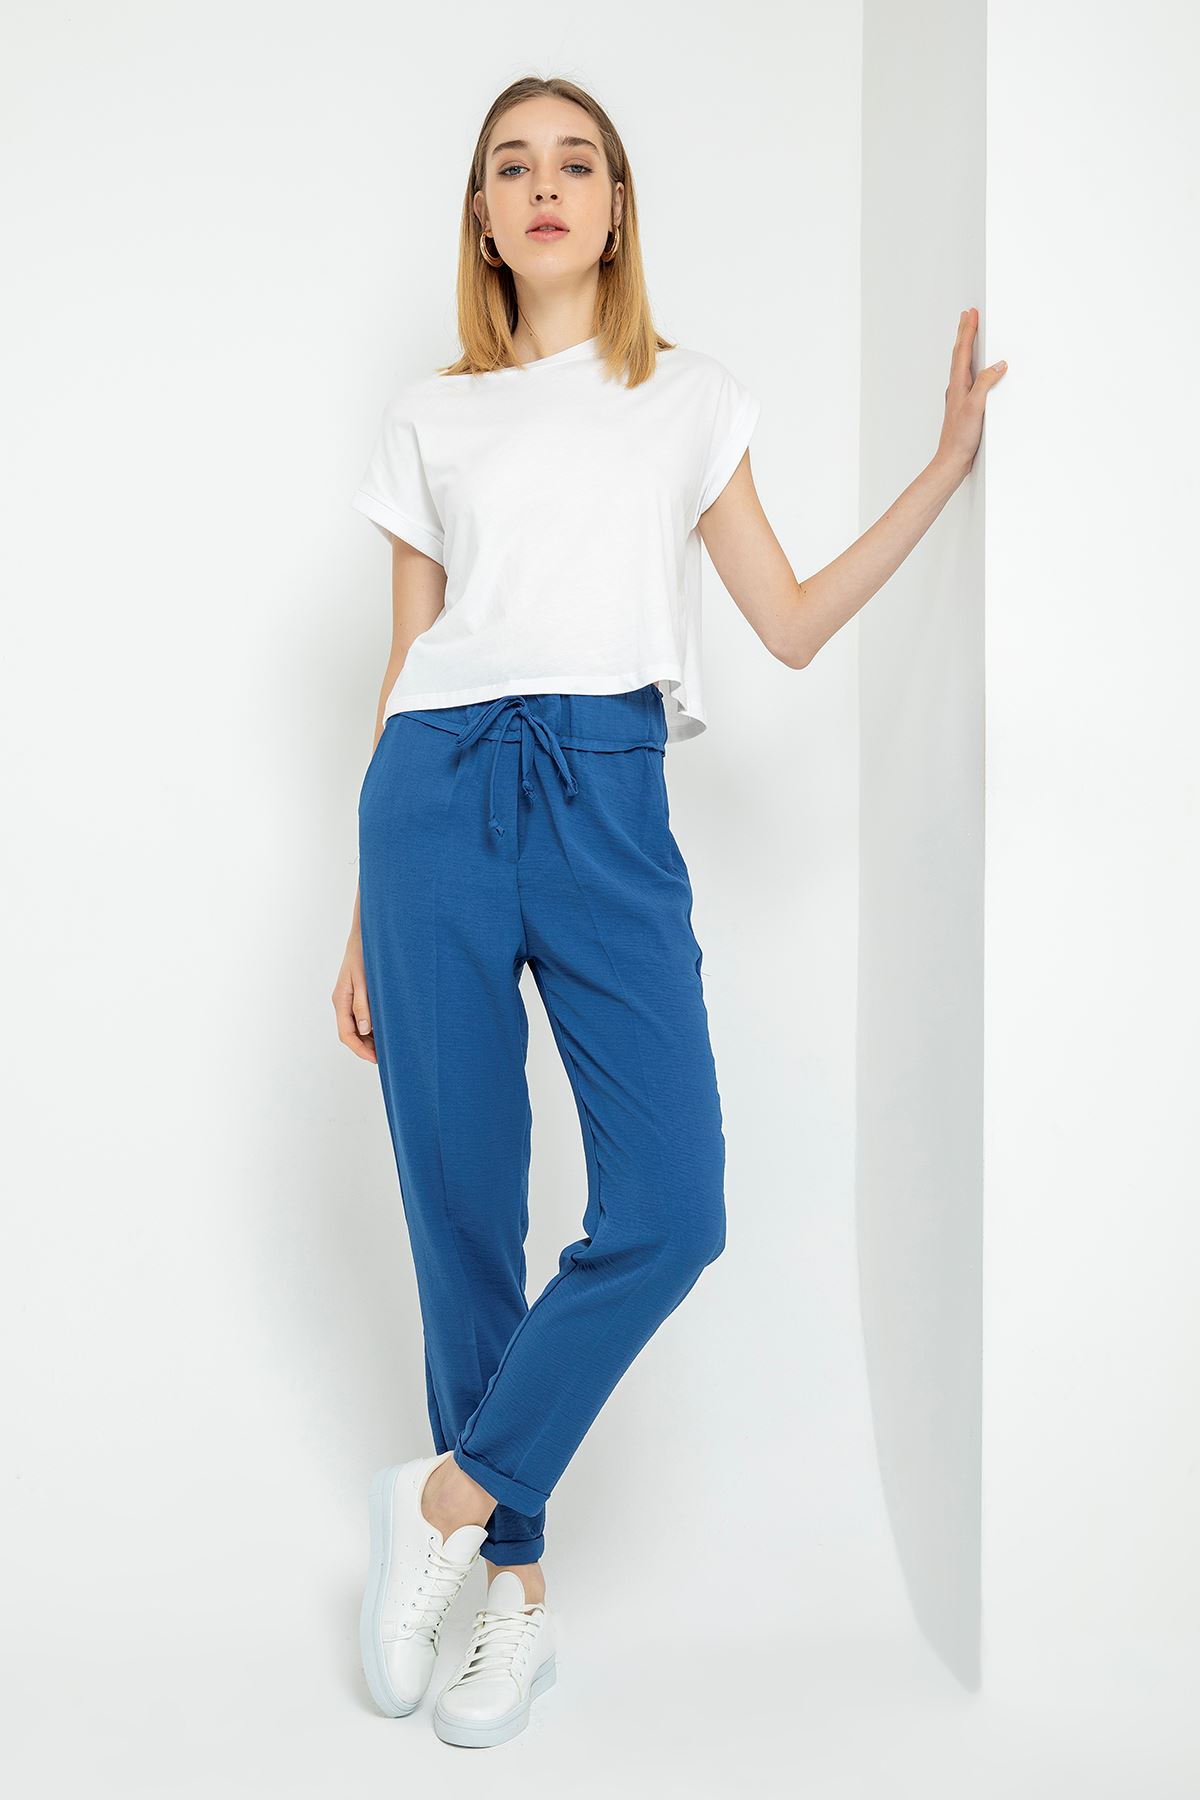 Linen Aerobin Fabric Ankle Length Wide Women'S Trouser - Navy Blue 